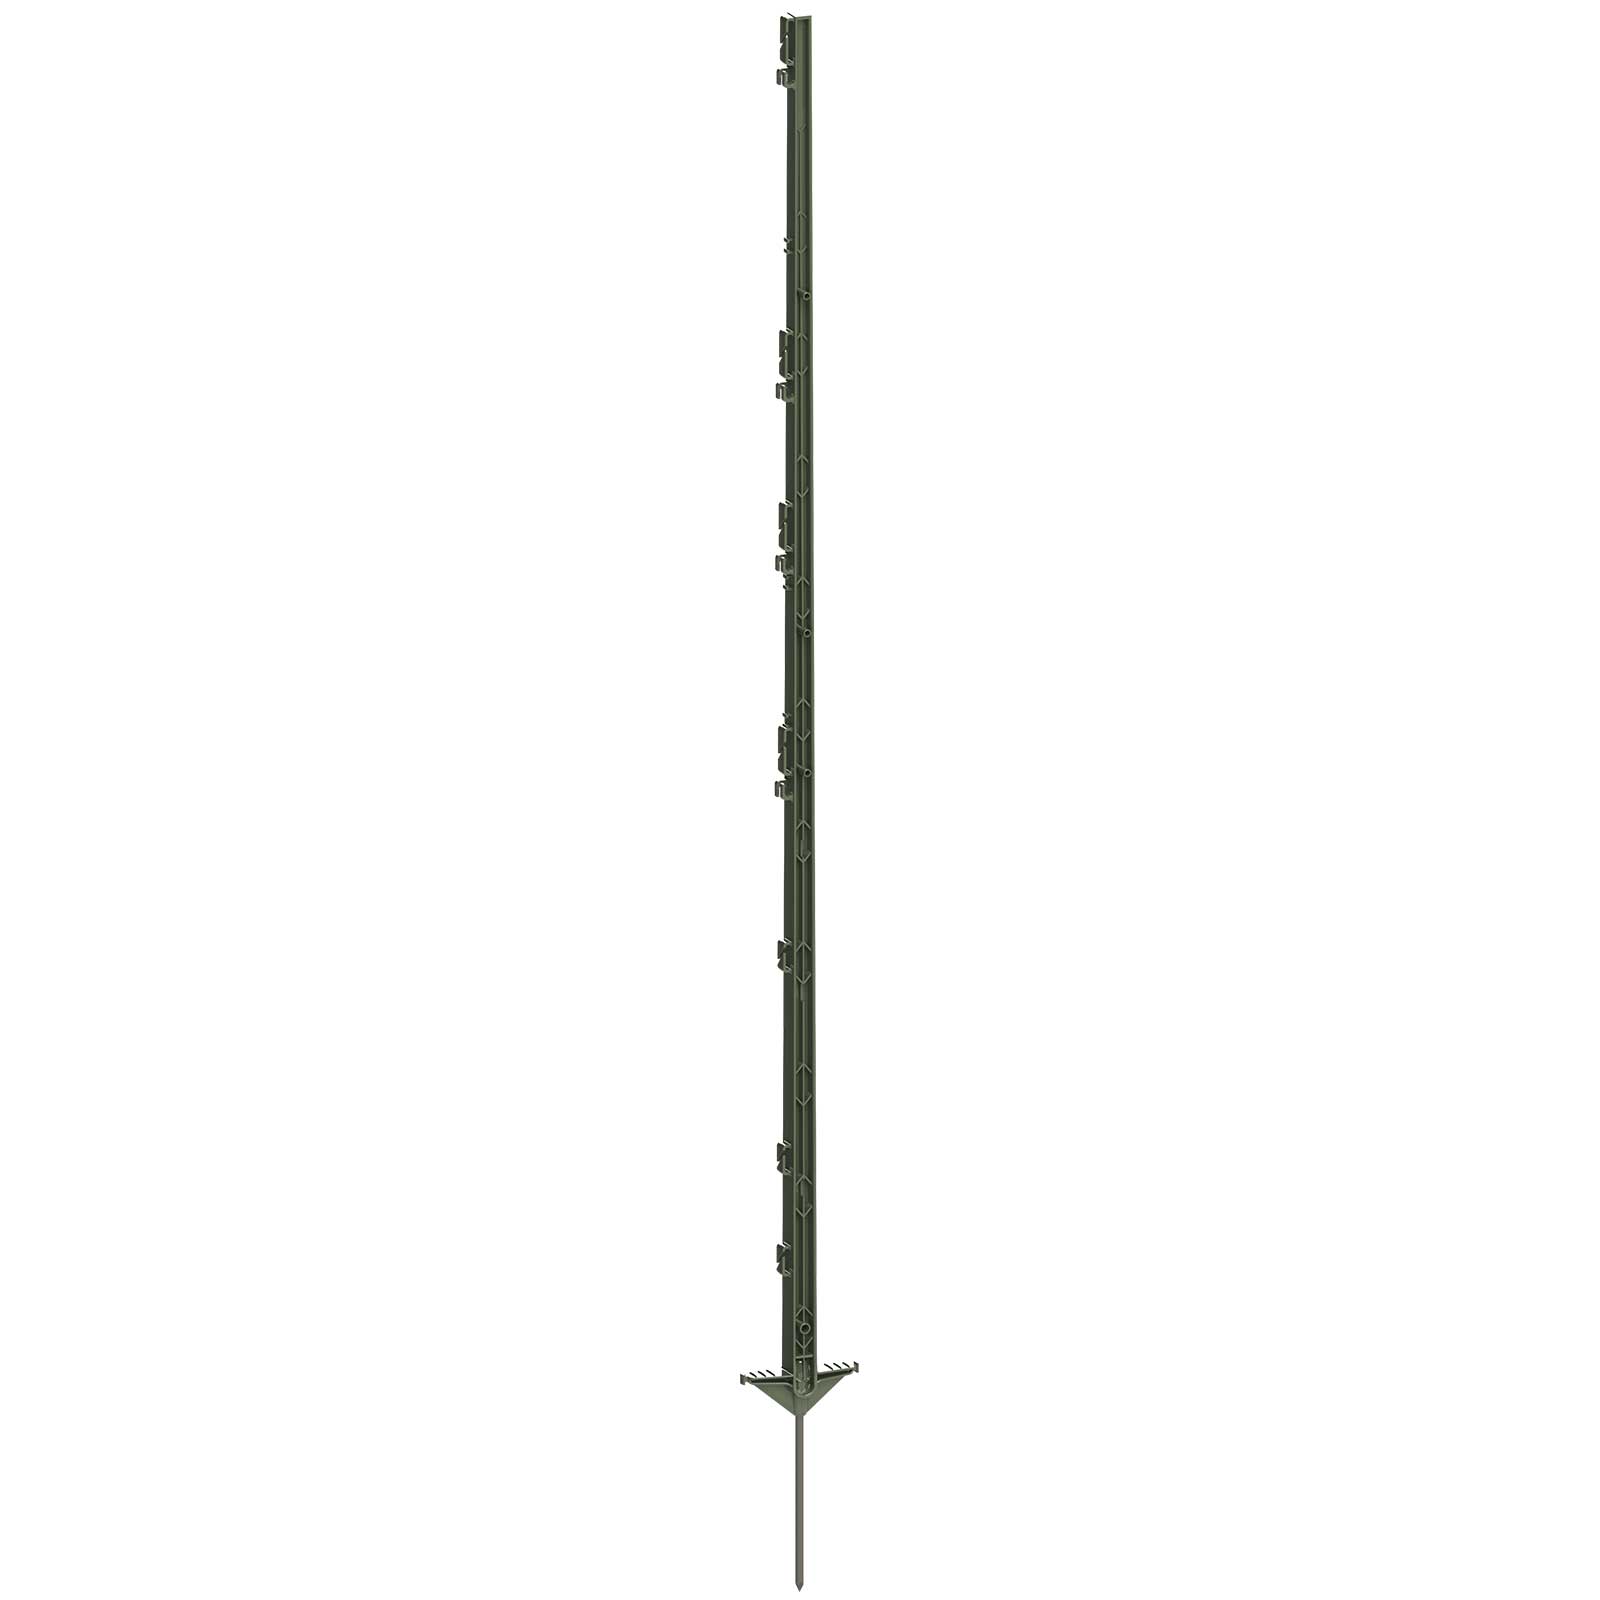 Plastic Post Expert 156 cm, Doublestep, green (5 pcs.)